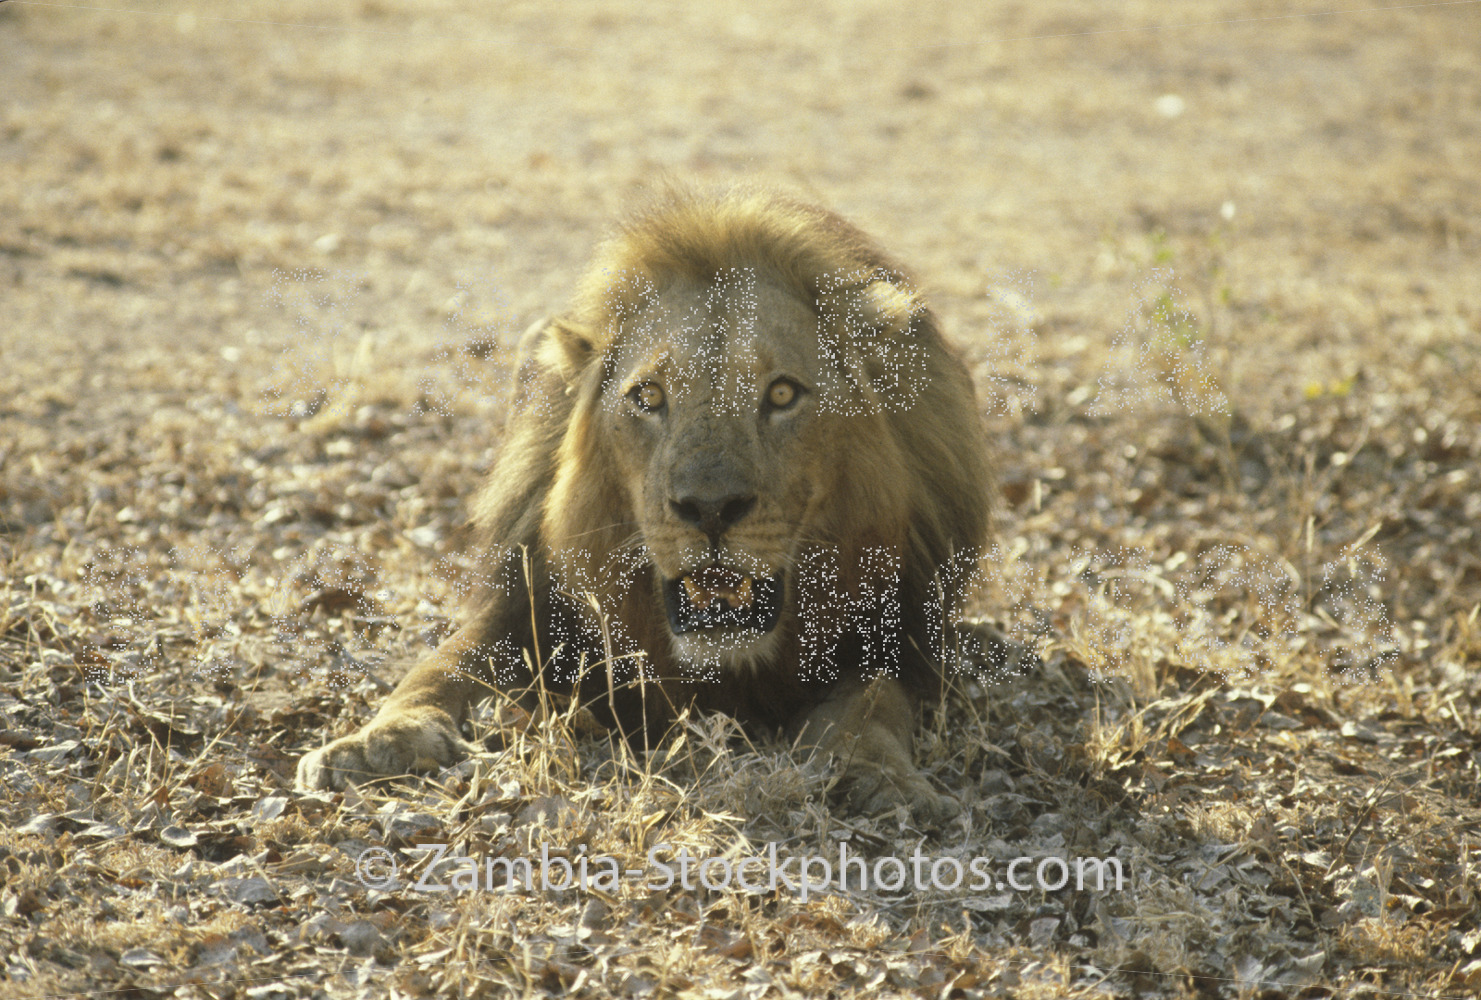 lion crouching.jpg - Zamstockphotos.com